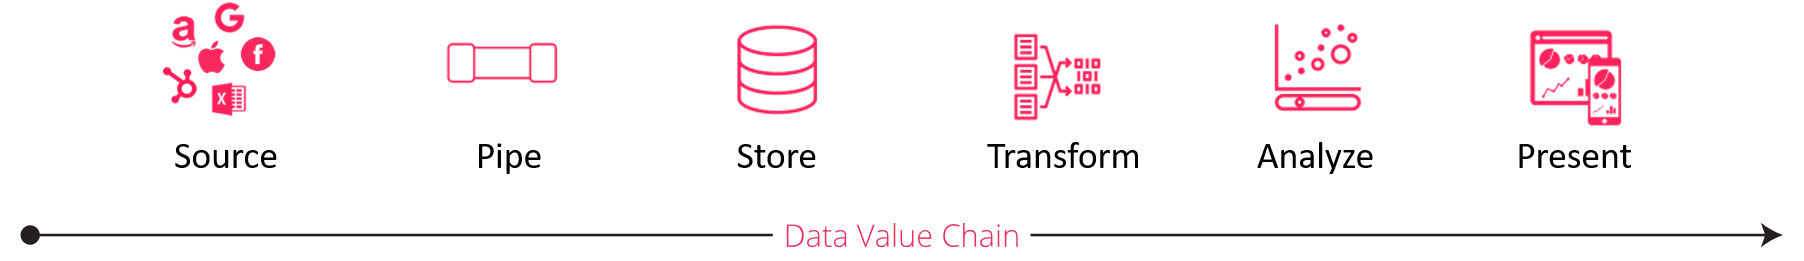 Visualization of data value chain